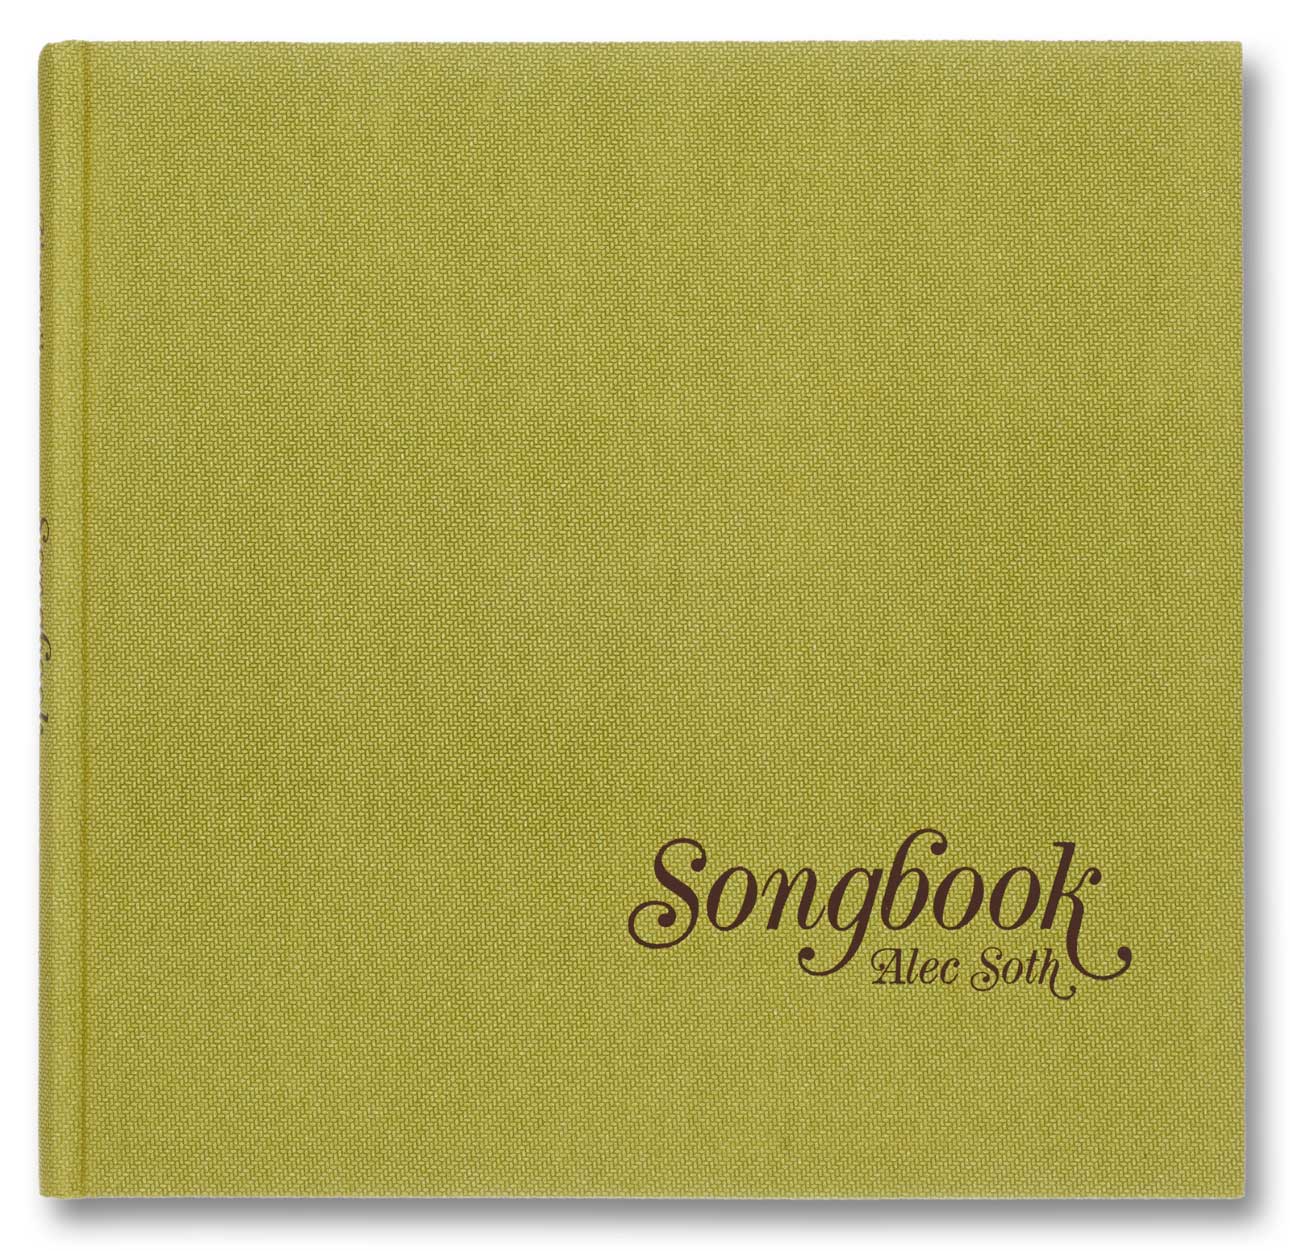 Songbook. MACK, 2015.